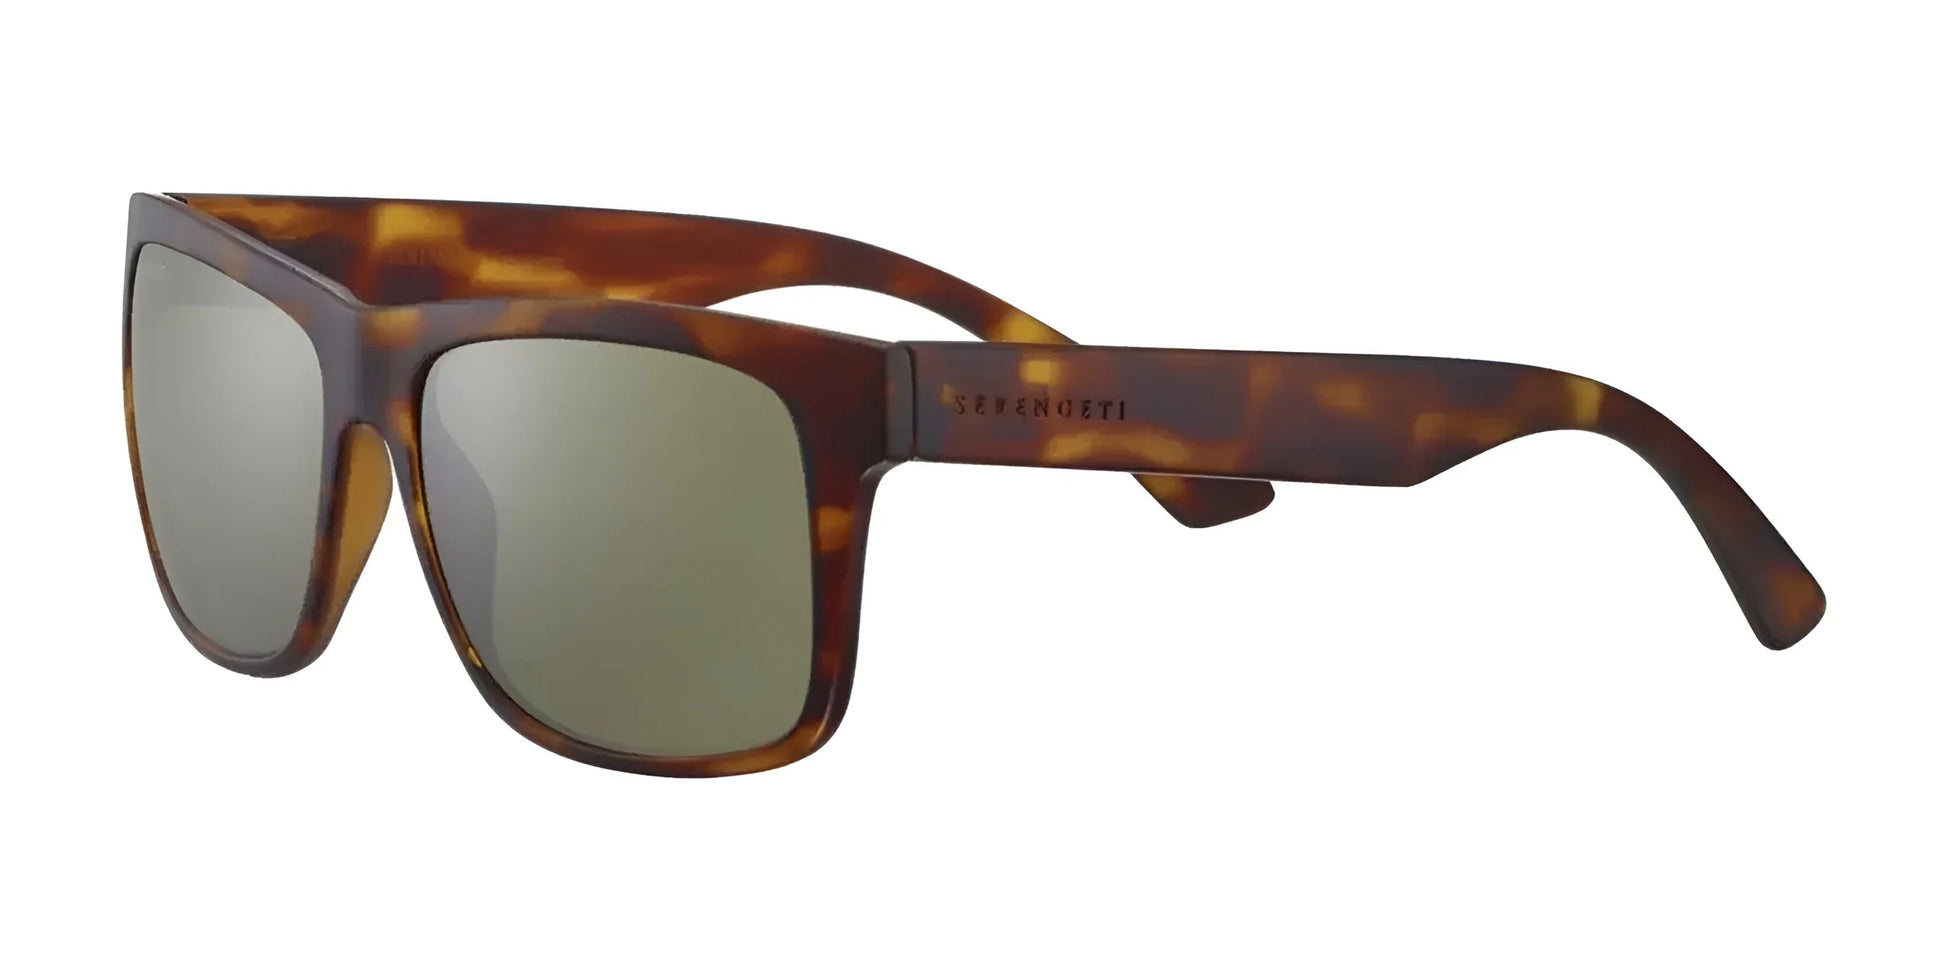 Serengeti POSITANO Sunglasses Matte Tortoise / Mineral Polarized 555nm Cat 3 to 3